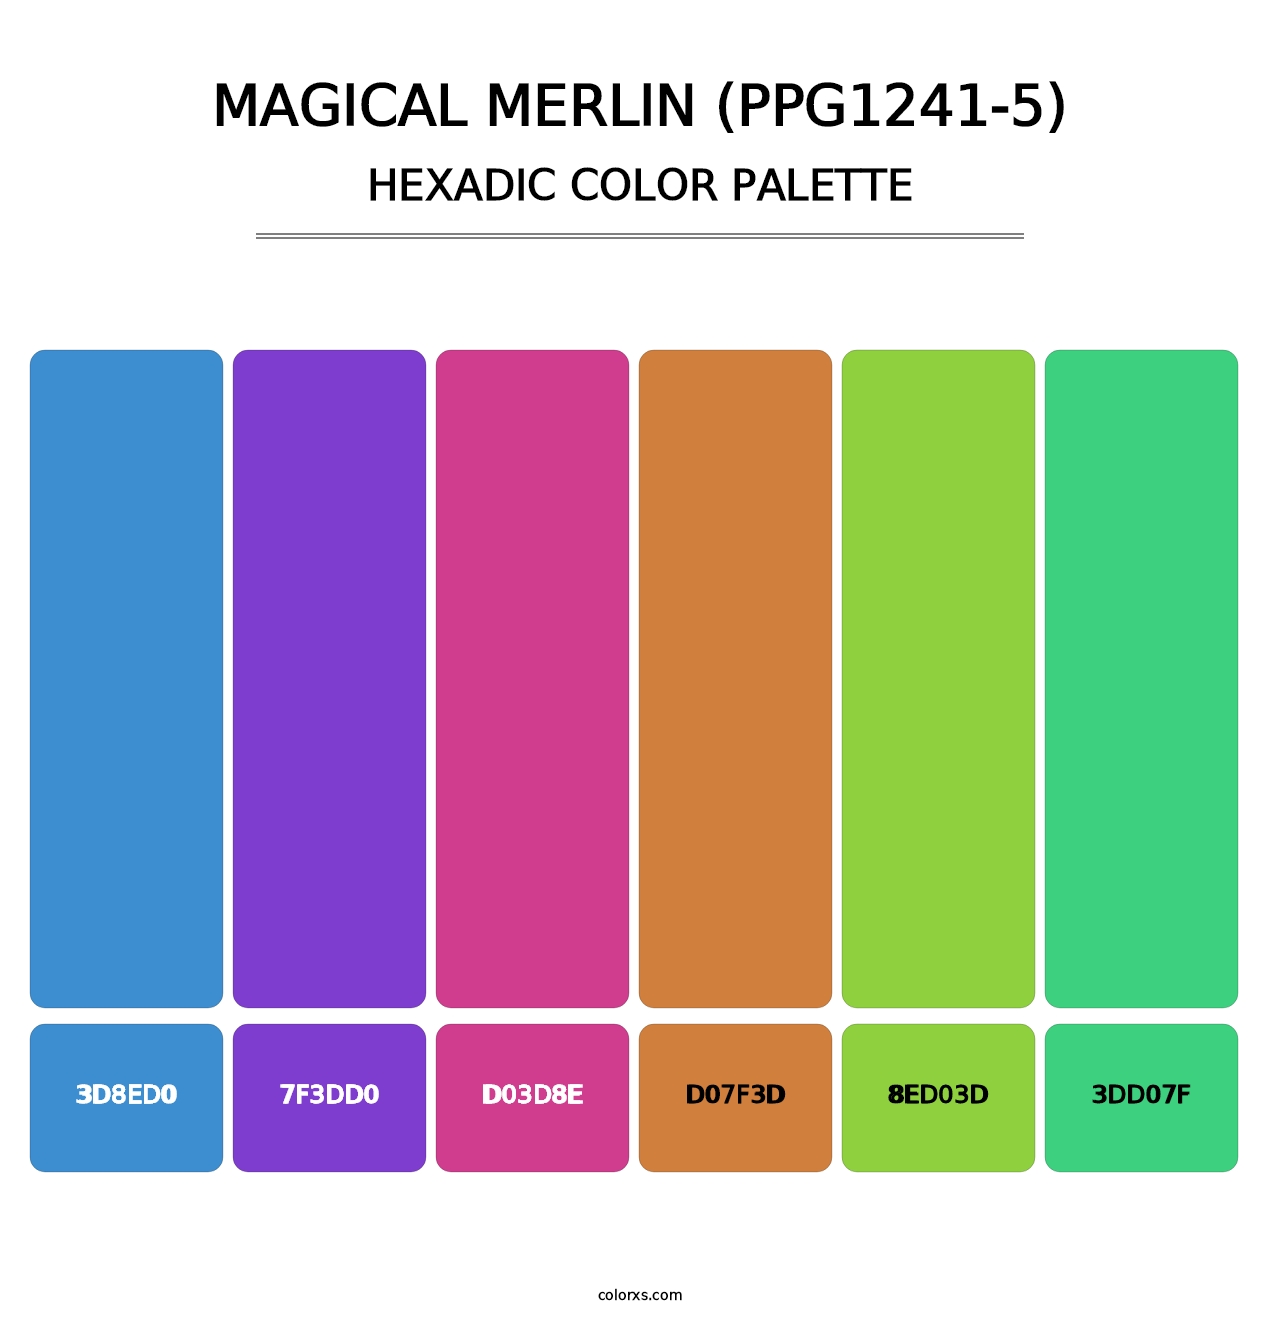 Magical Merlin (PPG1241-5) - Hexadic Color Palette